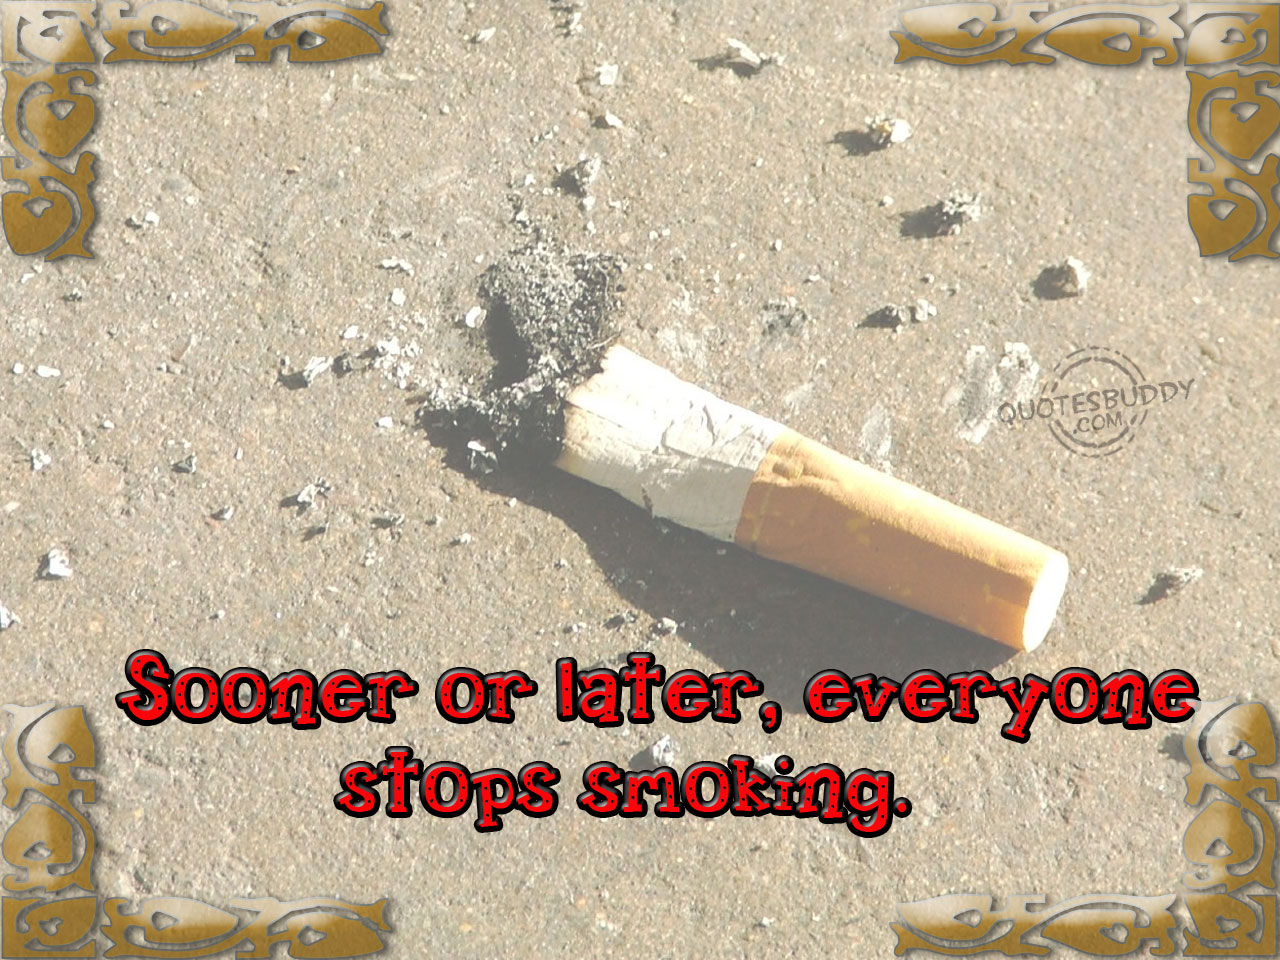 Sooner or later, everyone stops smoking